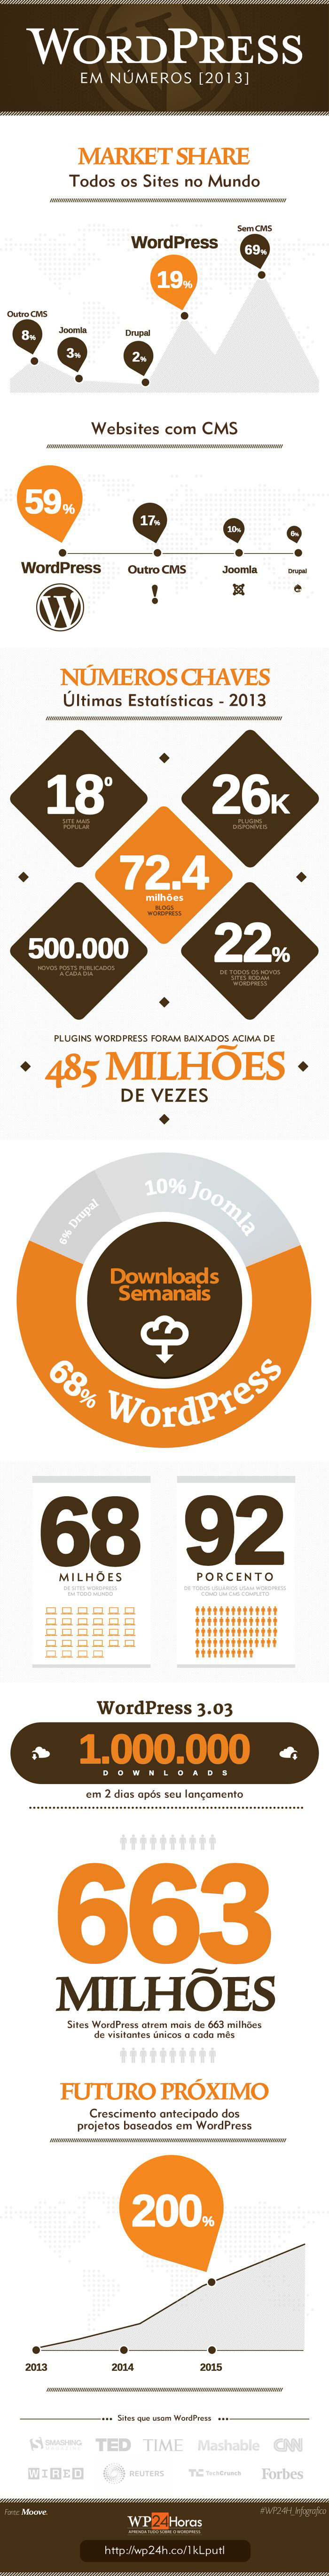 Infográfico WordPress em Números 2013